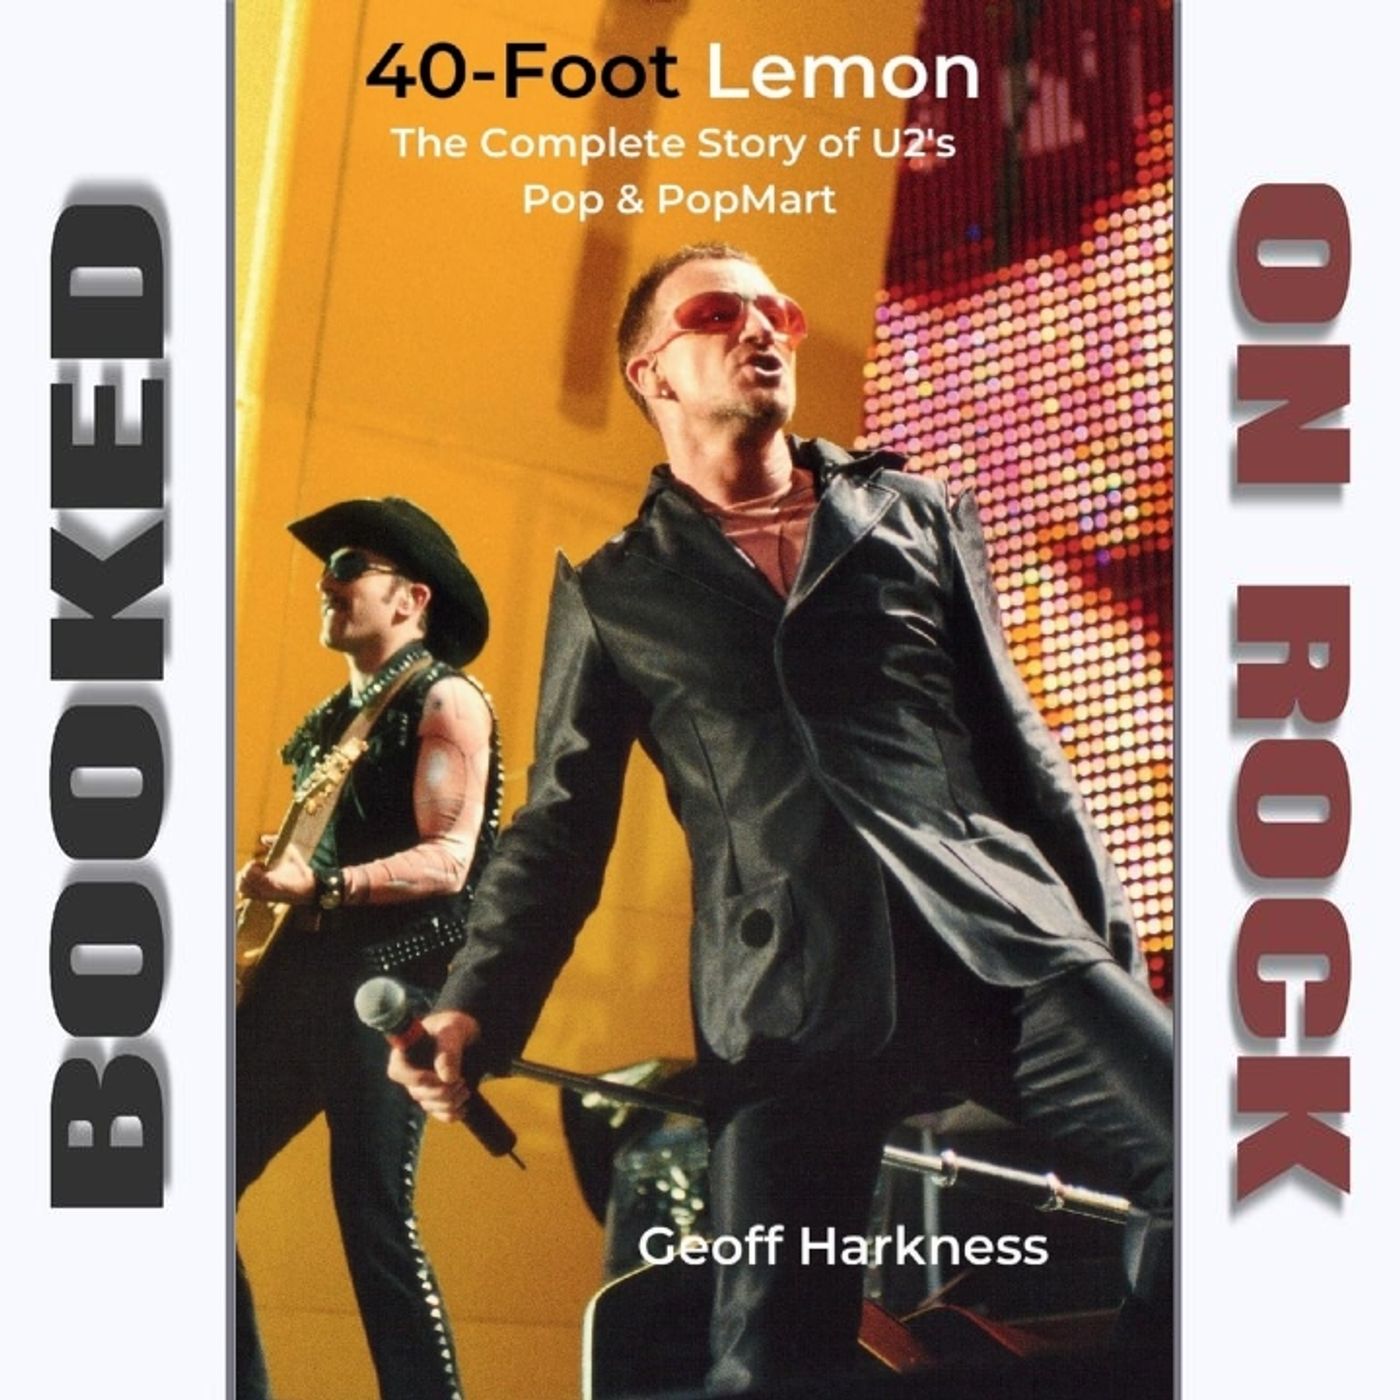 U2’s ’Pop’ - A Lemon Or Overlooked Gem? [Episode 192]